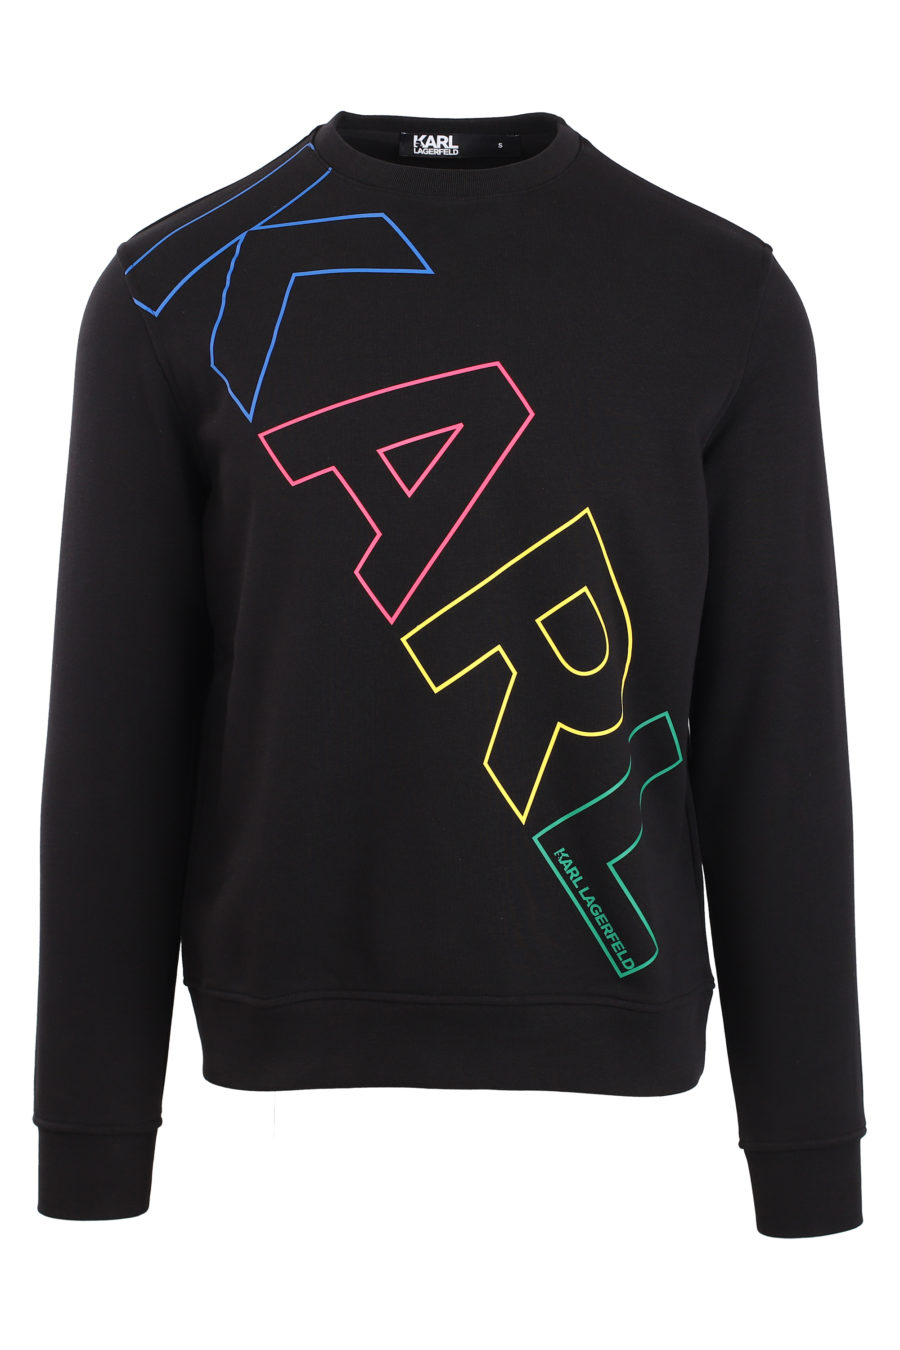 Schwarzes Sweatshirt mit mehrfarbigem Maxi-Logo - IMG 0896